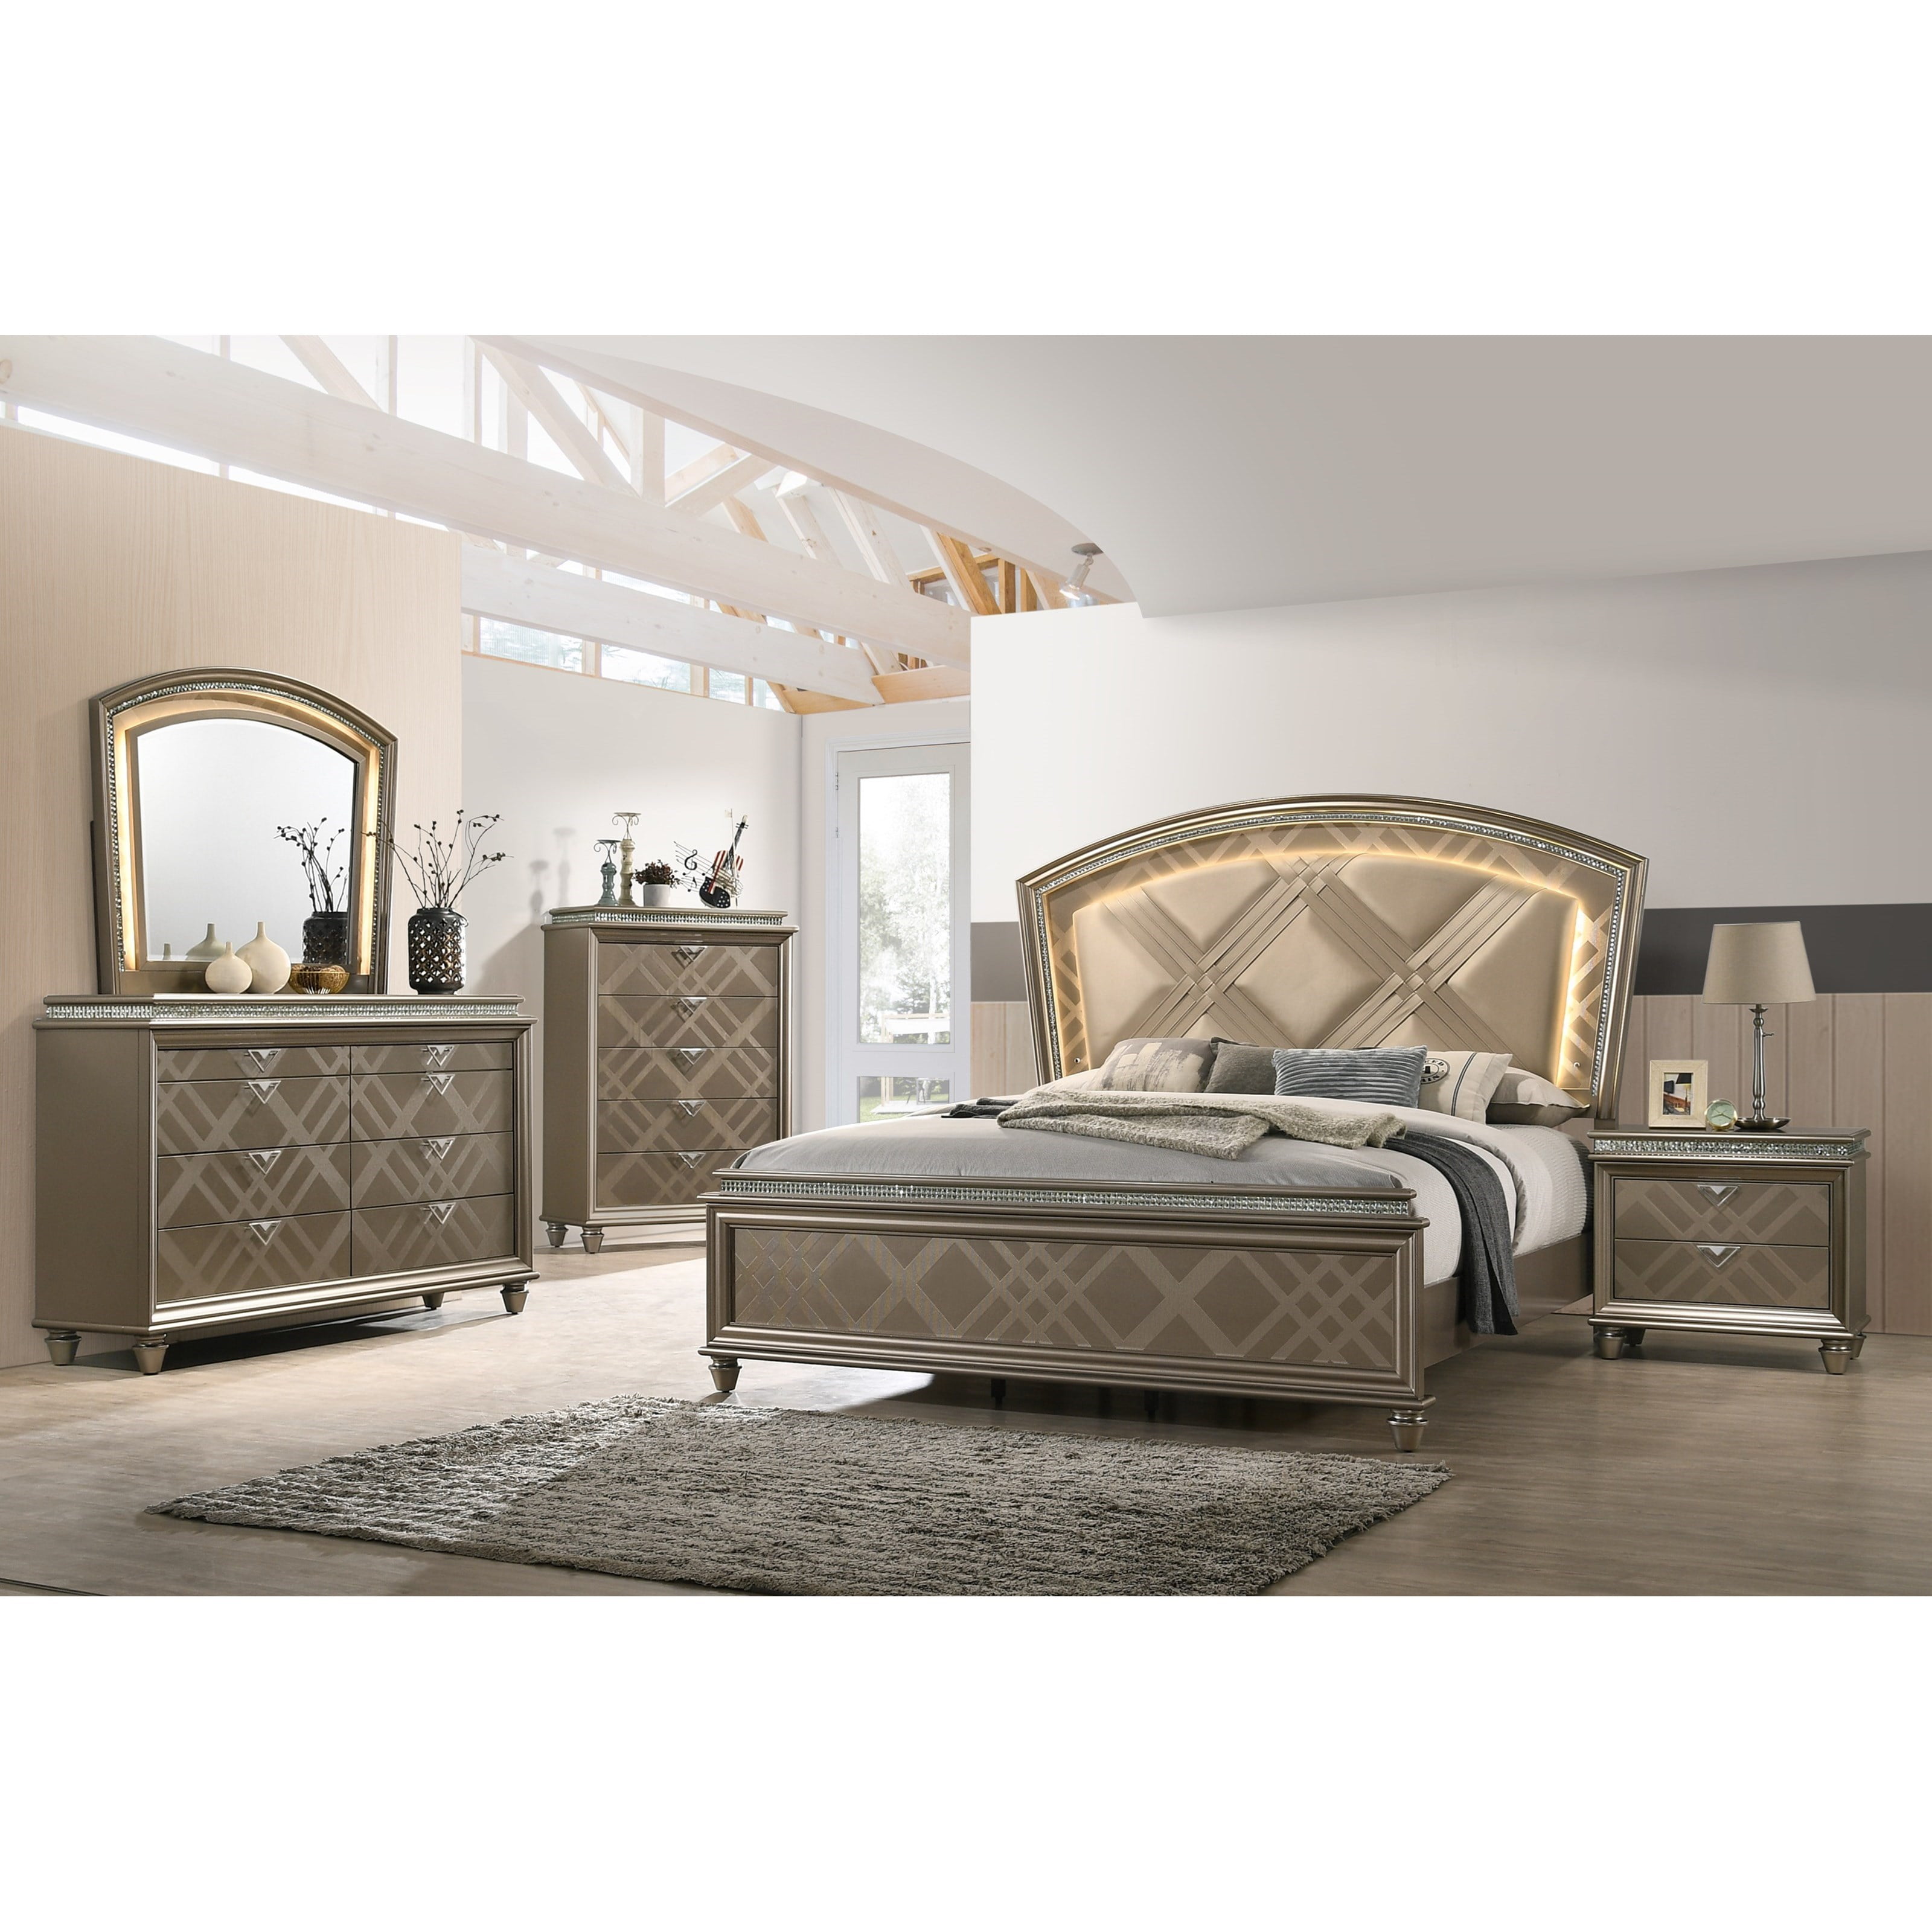 Contemporary 4pc Queen Size Bedroom Set, Mirrored Queen Size Bedroom Sets